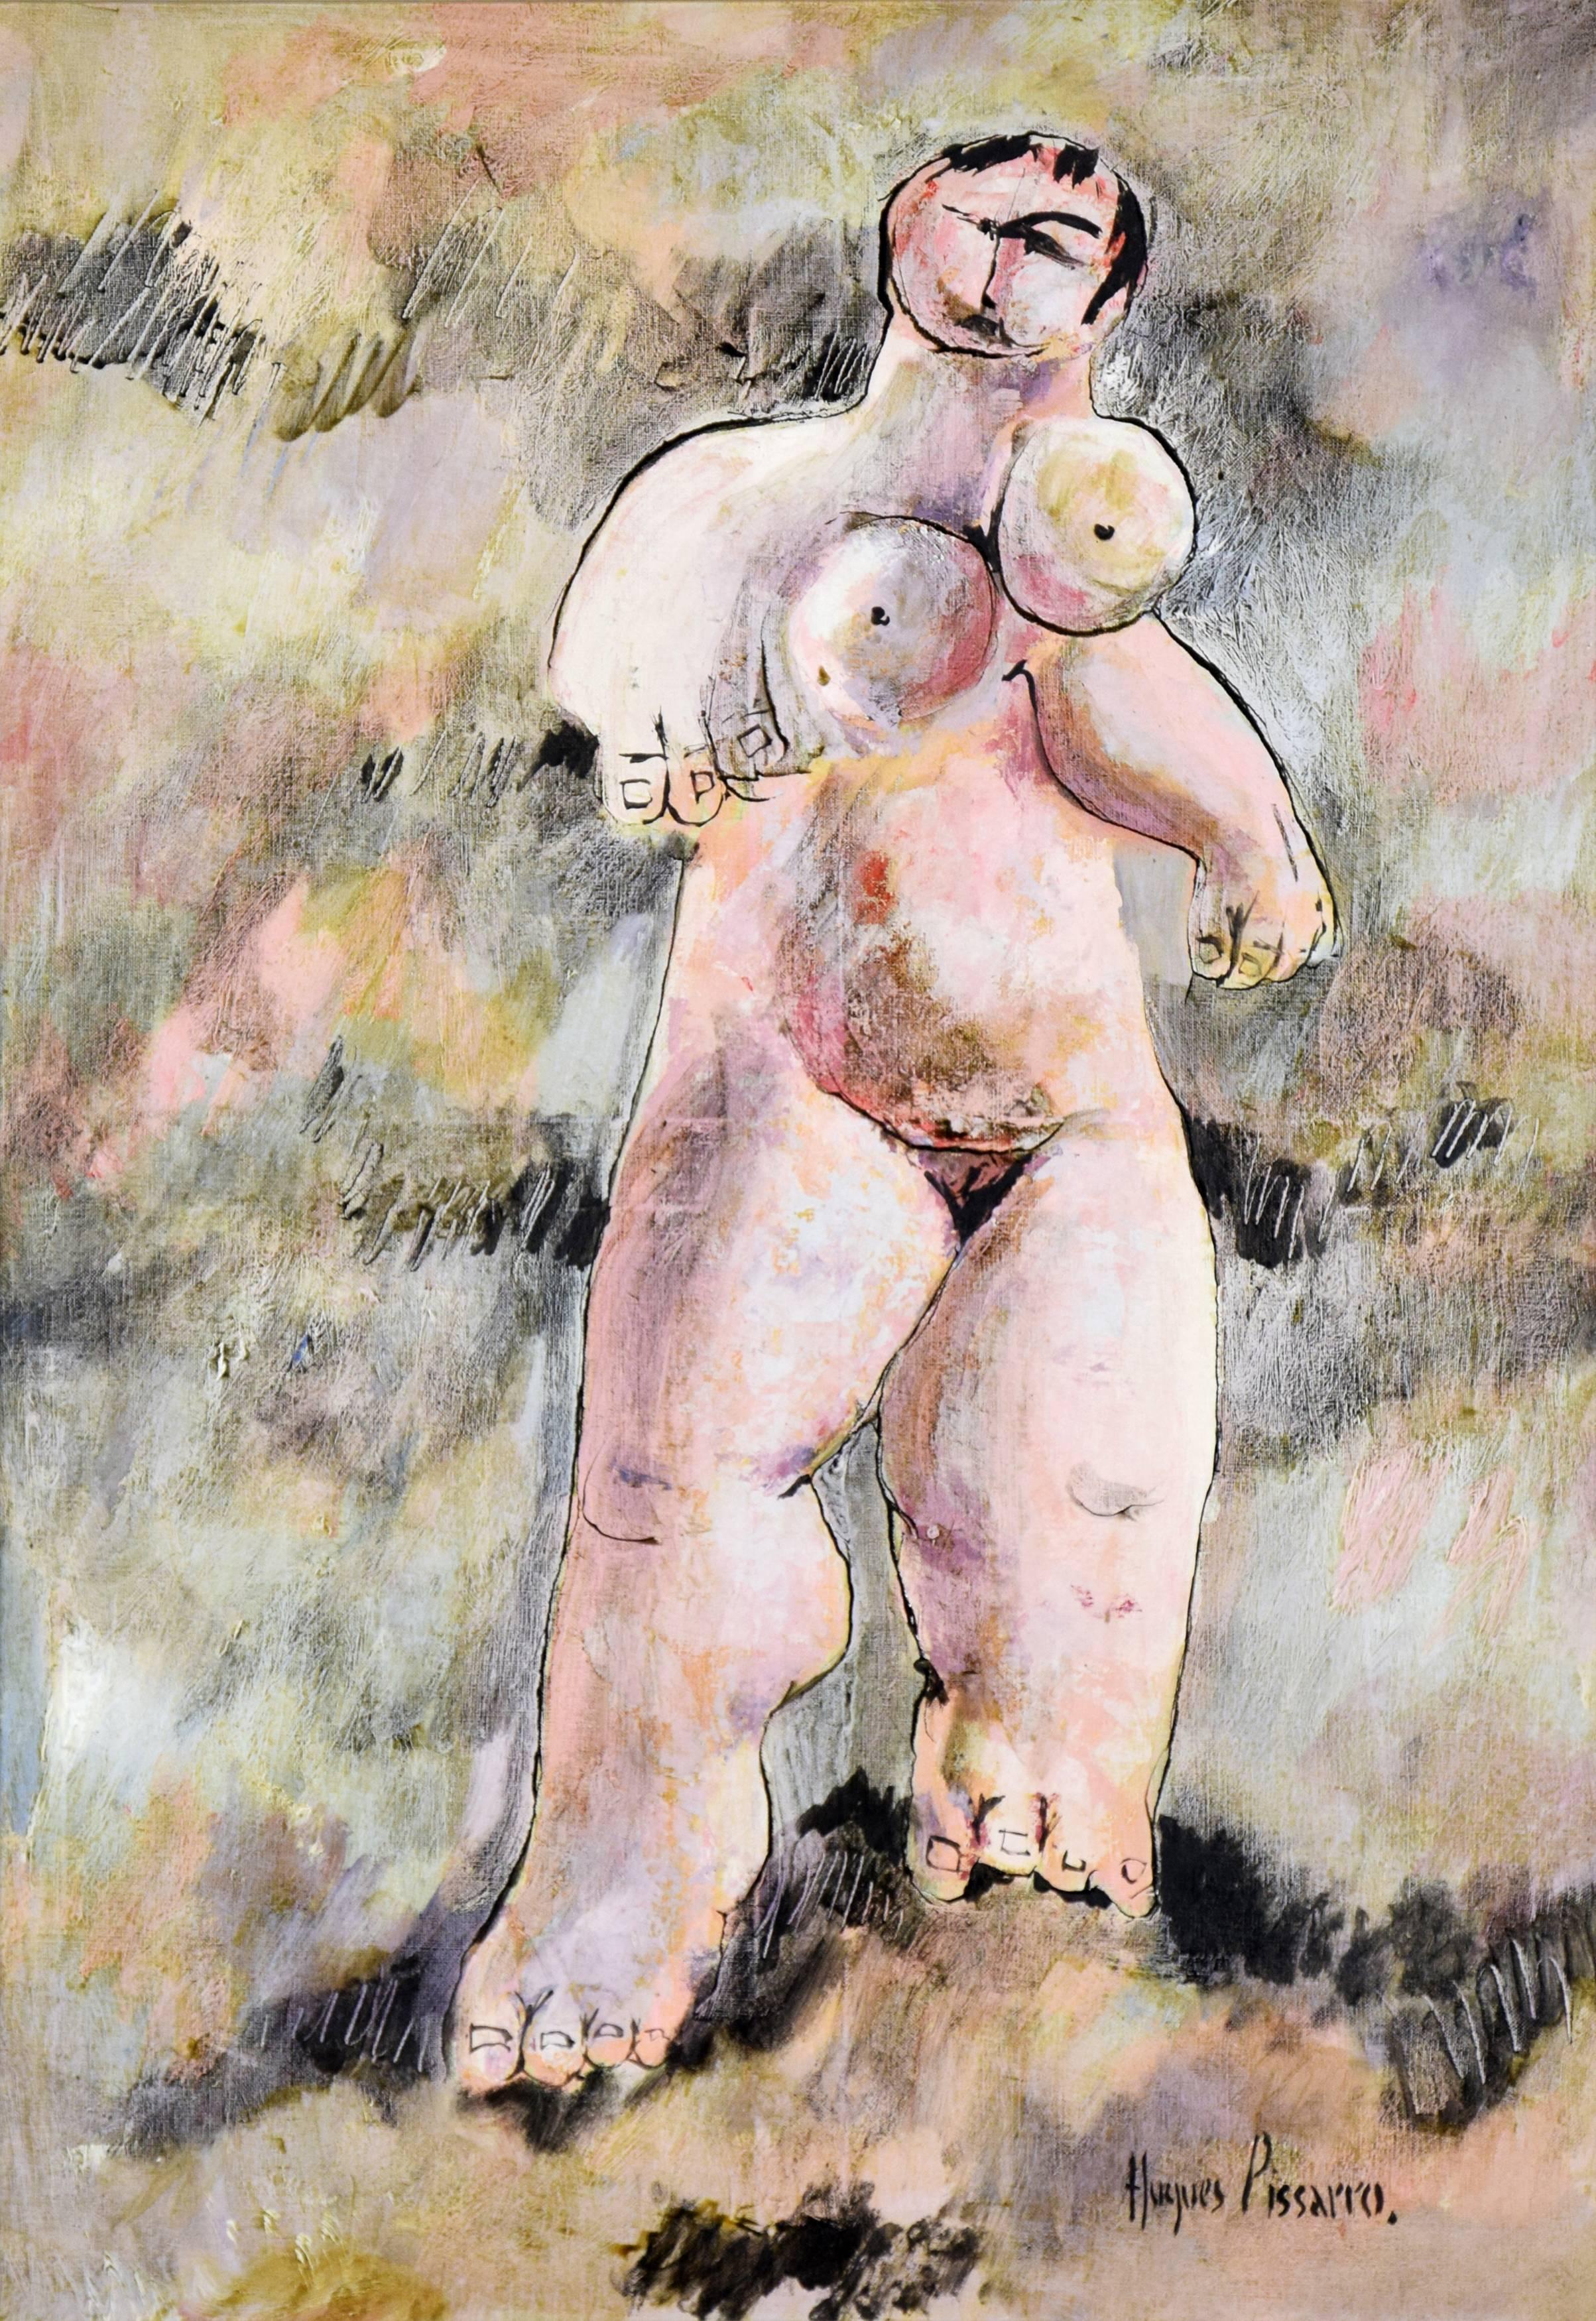 Peinture Nue Debout de HUGUES PISSARRO - Peinture de nu, Figure humaine, Huile sur toile, Art